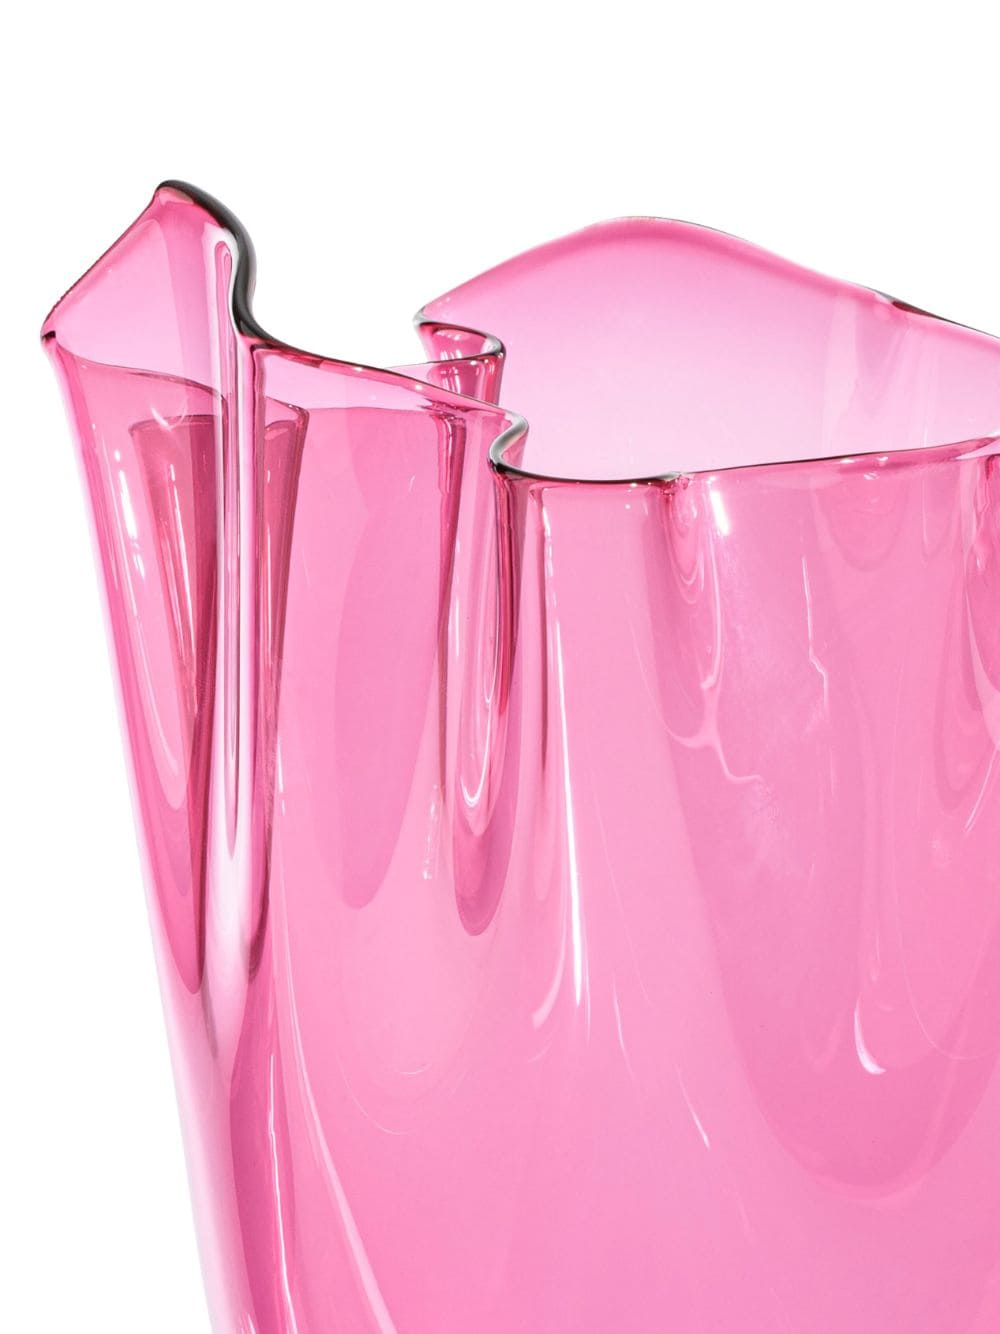 Venini Fazzlettoo glazed-finish vase (31cm) - Roze